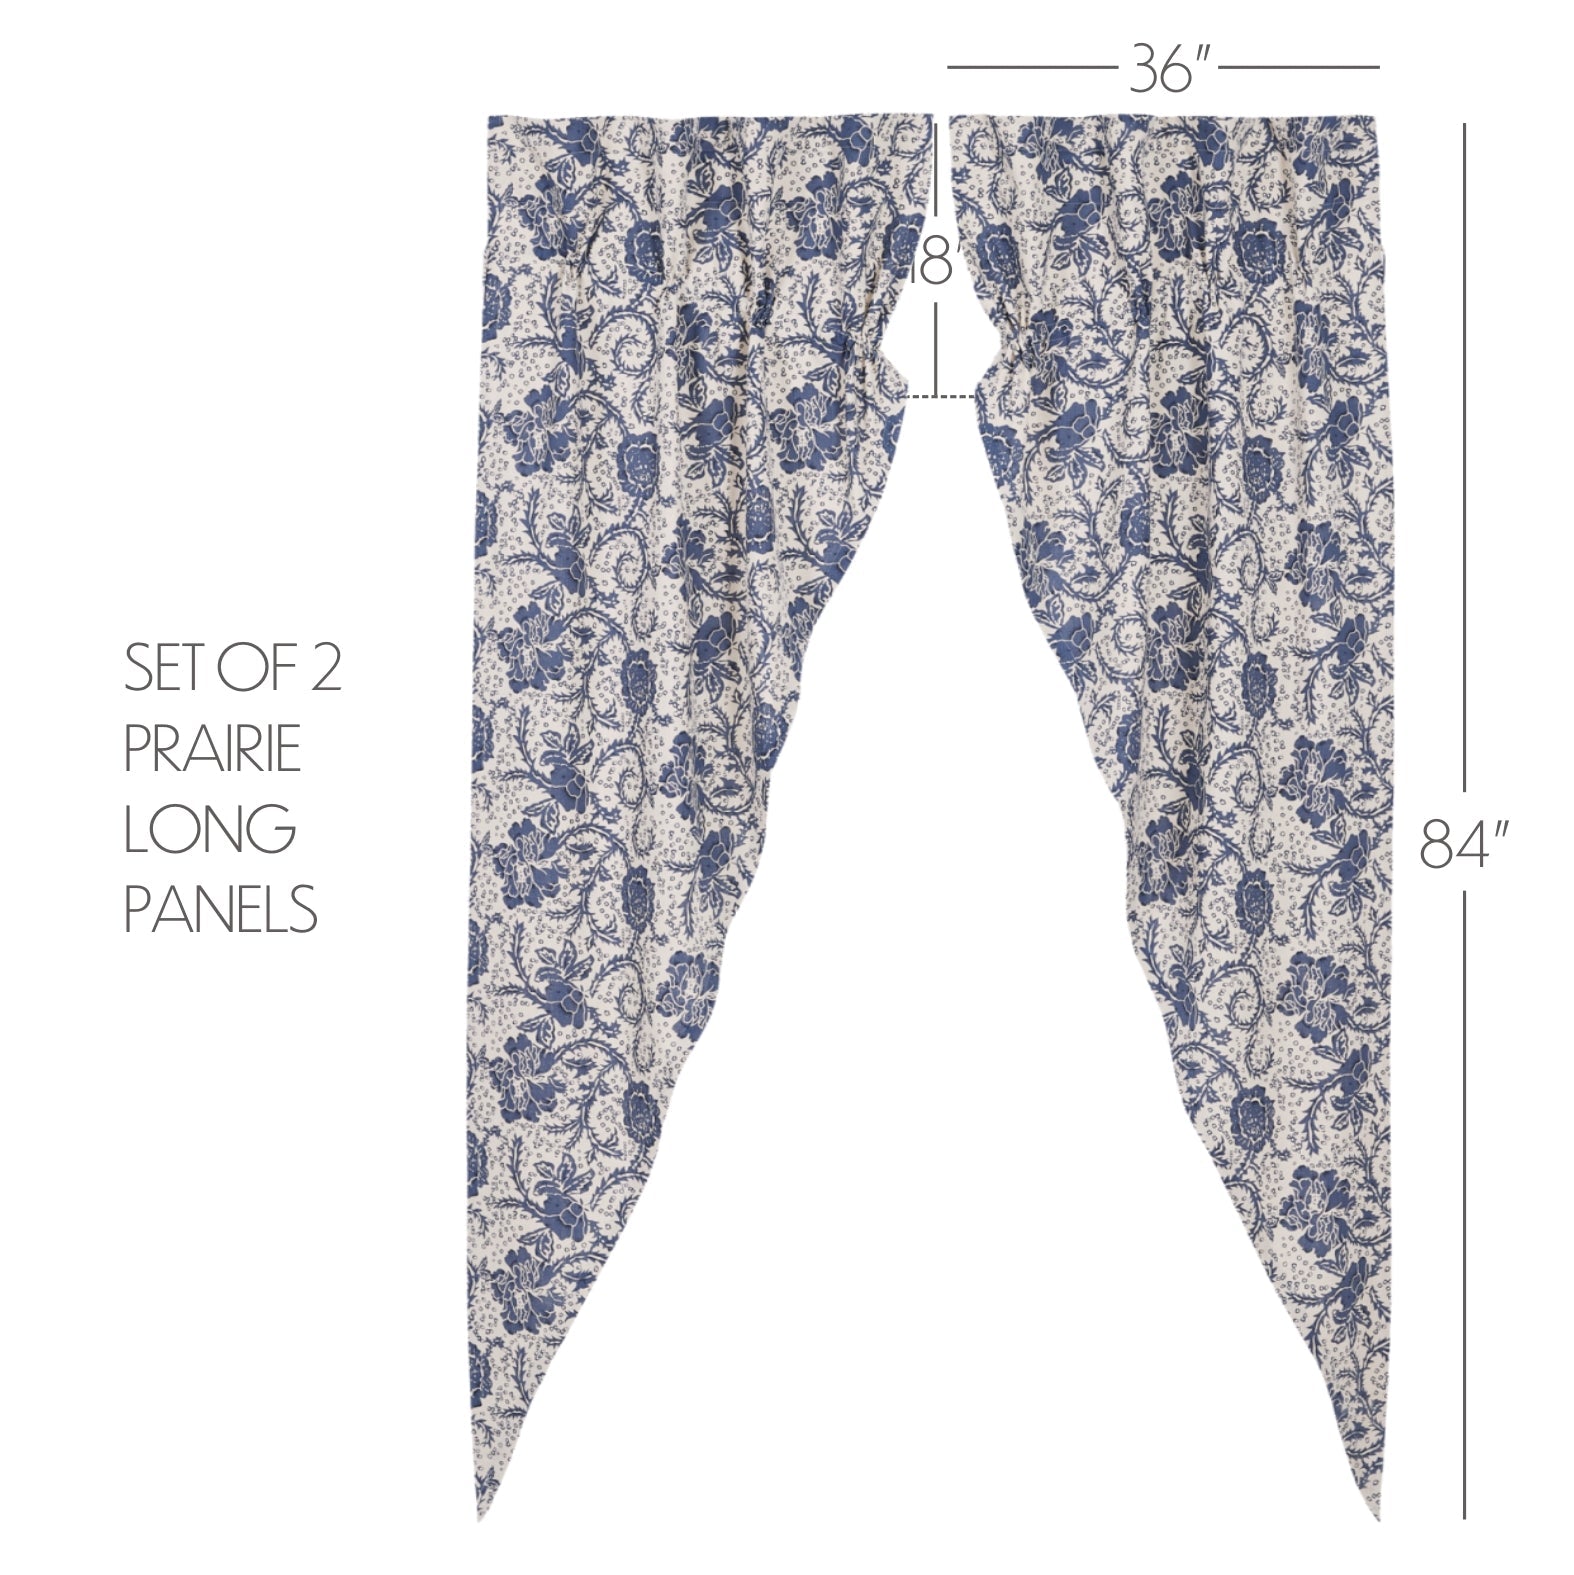 Dorset Navy Floral Prairie Long Panel Curtain Set of 2 84x36x18 VHC Brands